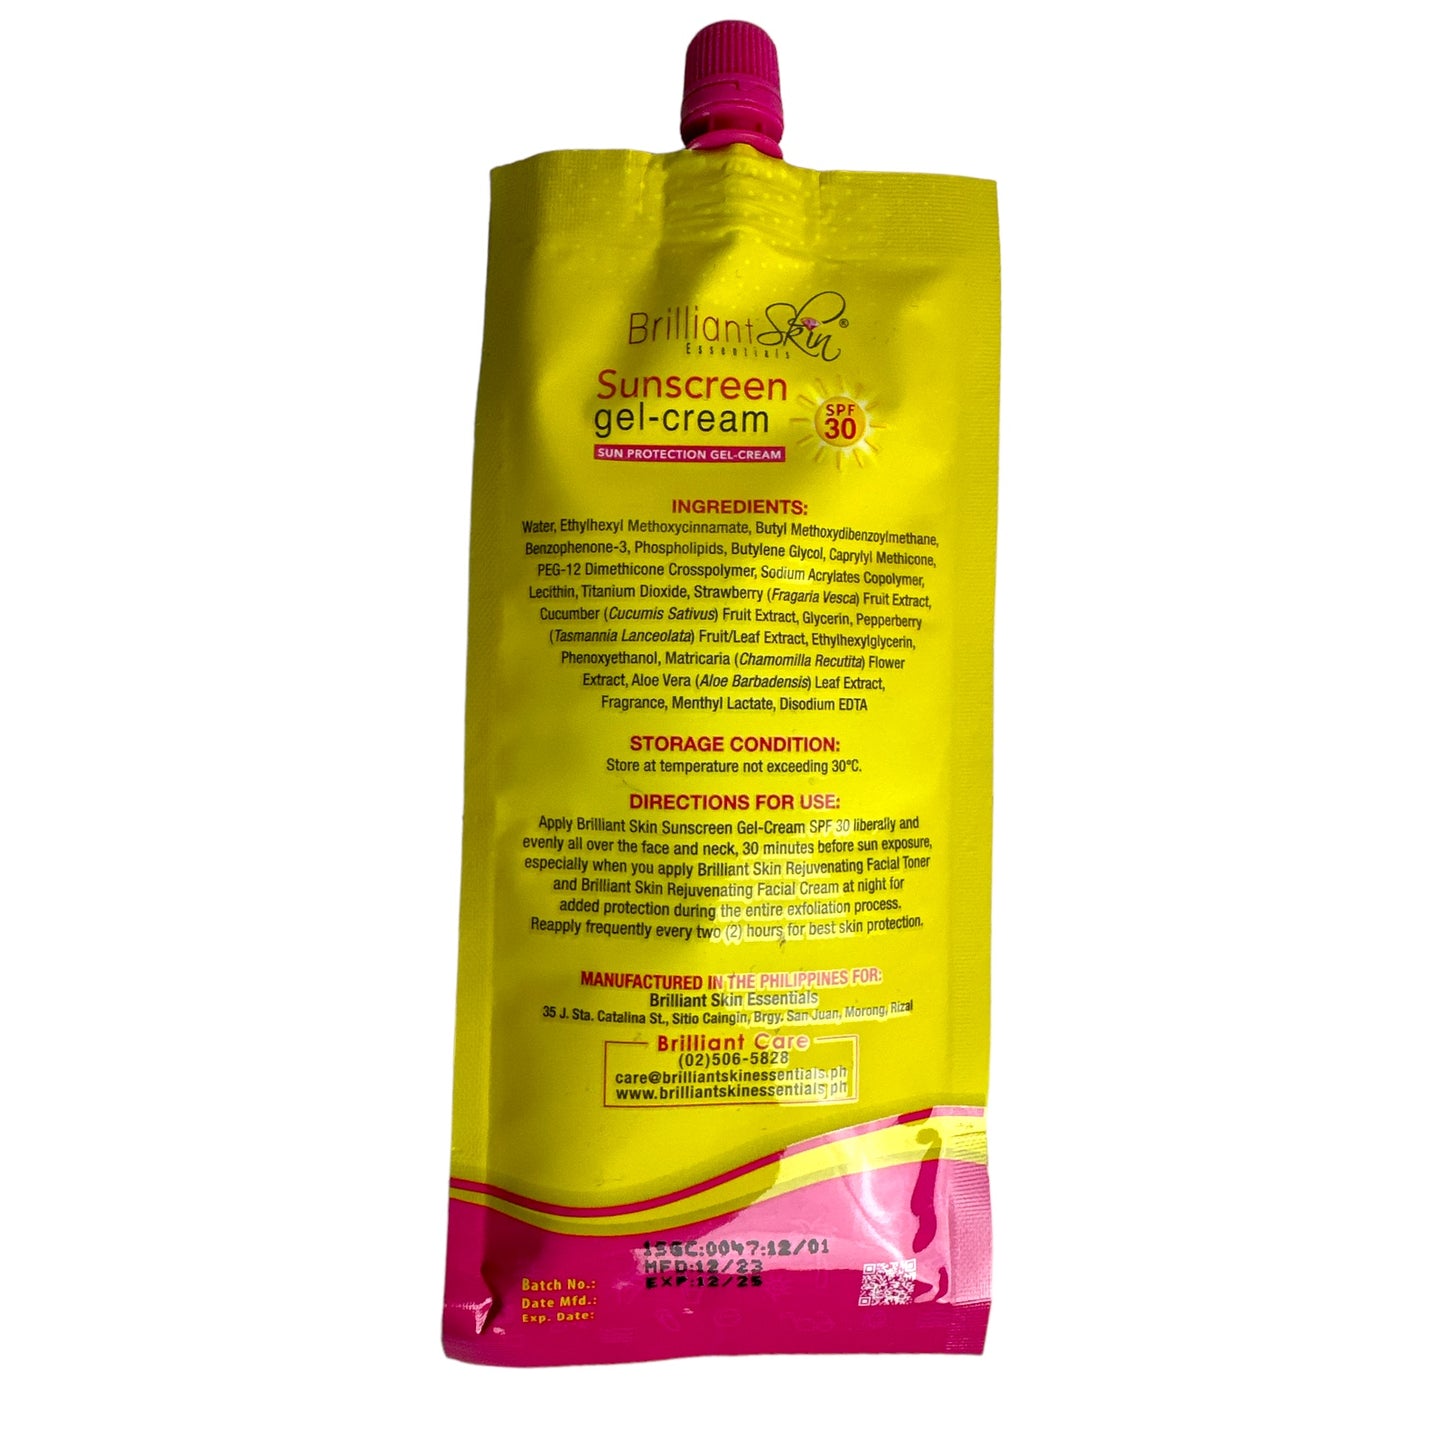 Brilliant Skin Essentials Sunscreen gel-cream SPF 30 50g